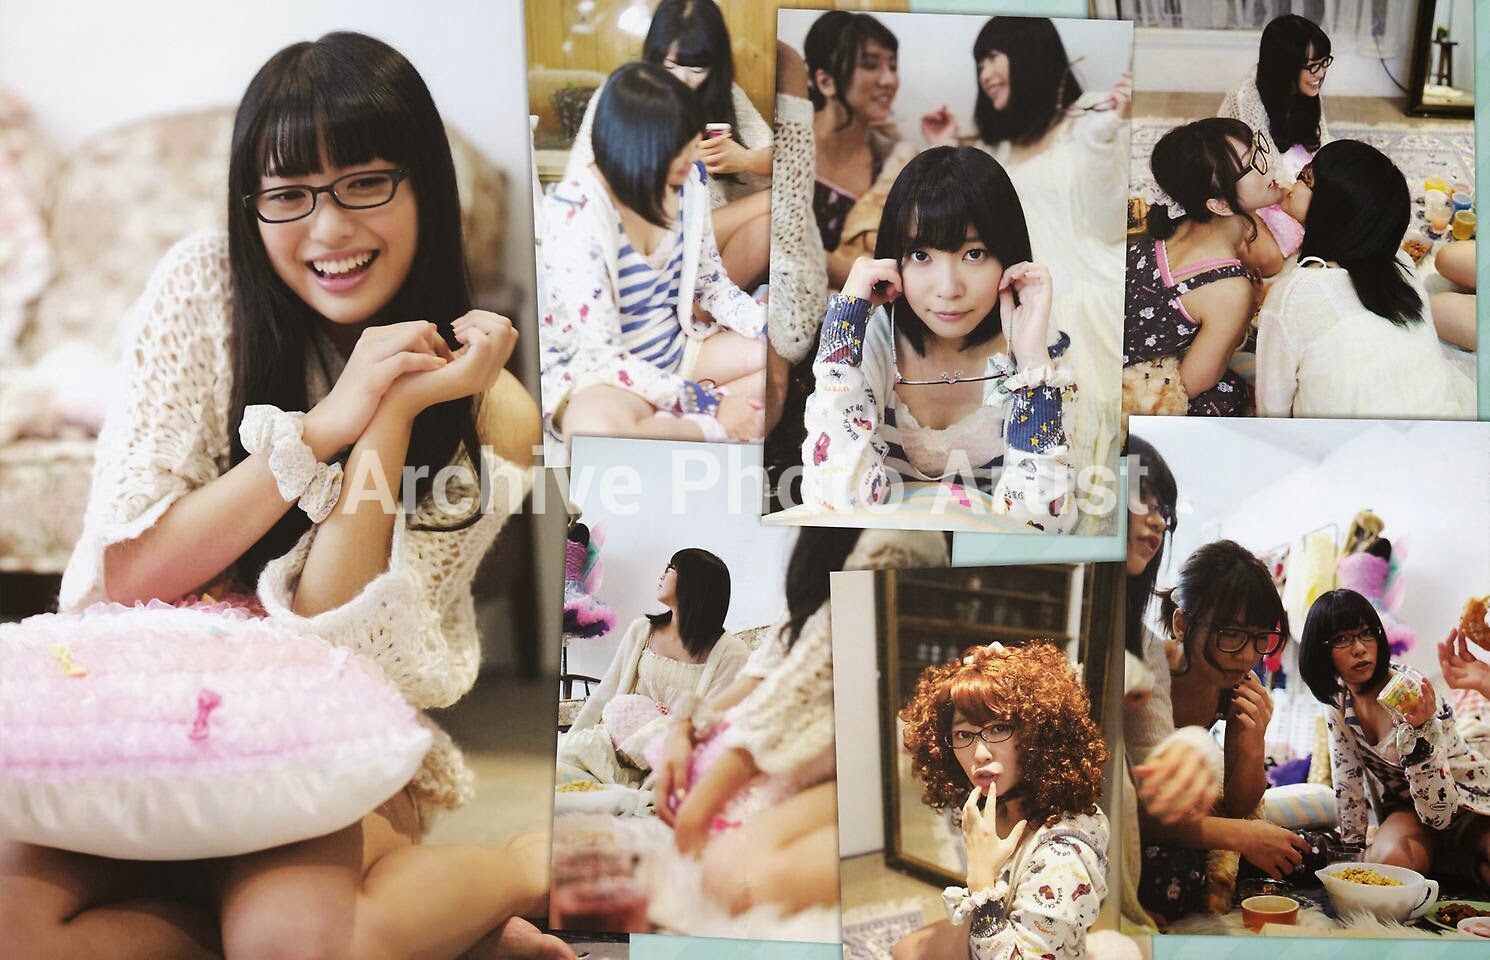 AKB48 Archive Photo Vol.01 - Archive Photo Artist